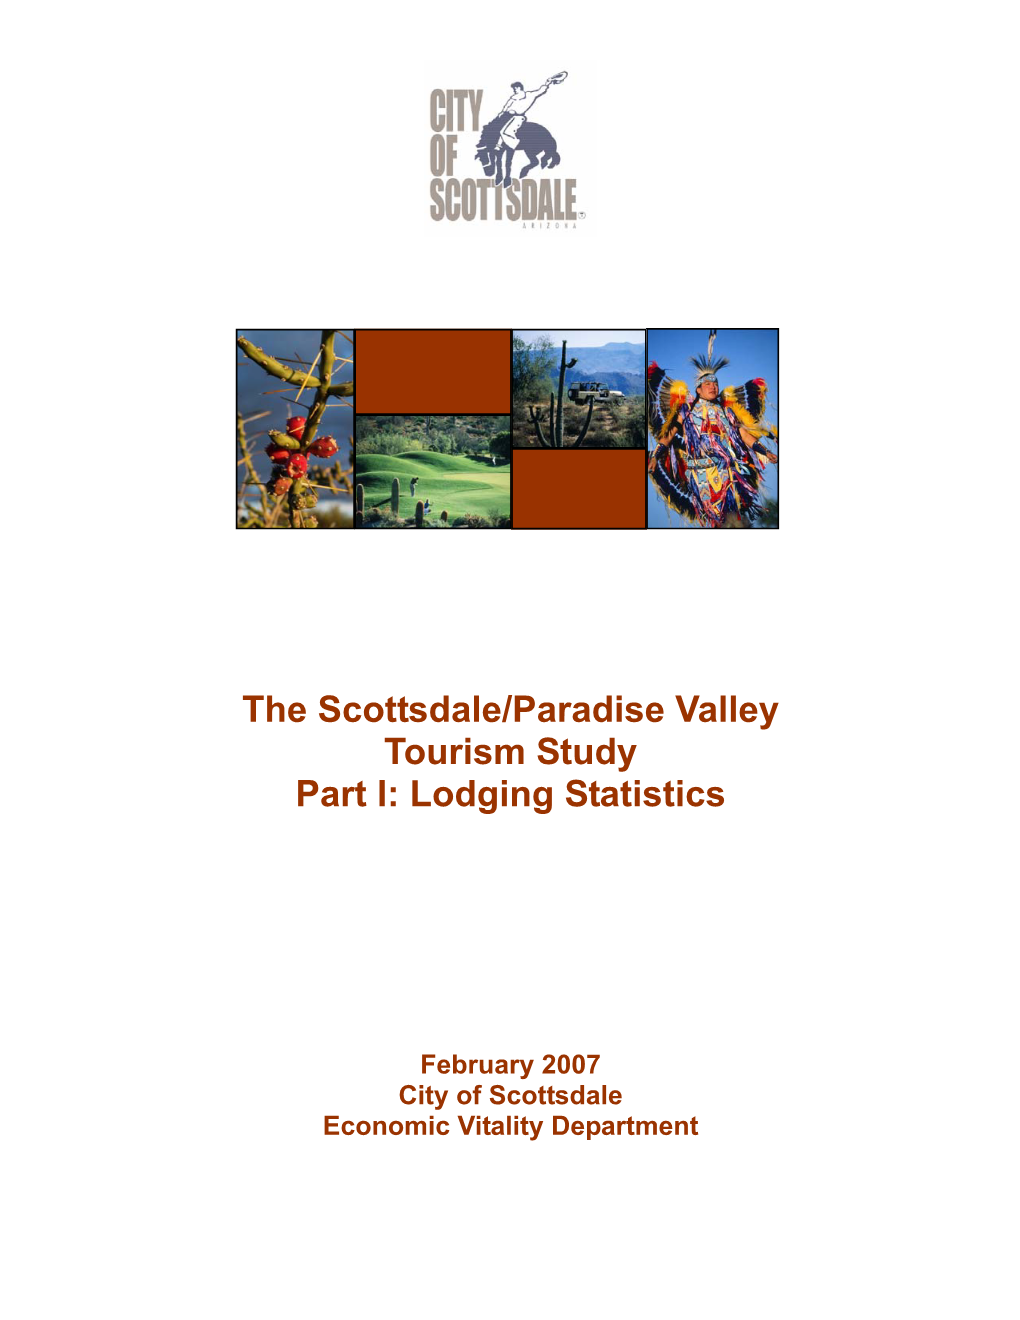 The Scottsdale/Paradise Valley Tourism Study Part I: Lodging Statistics